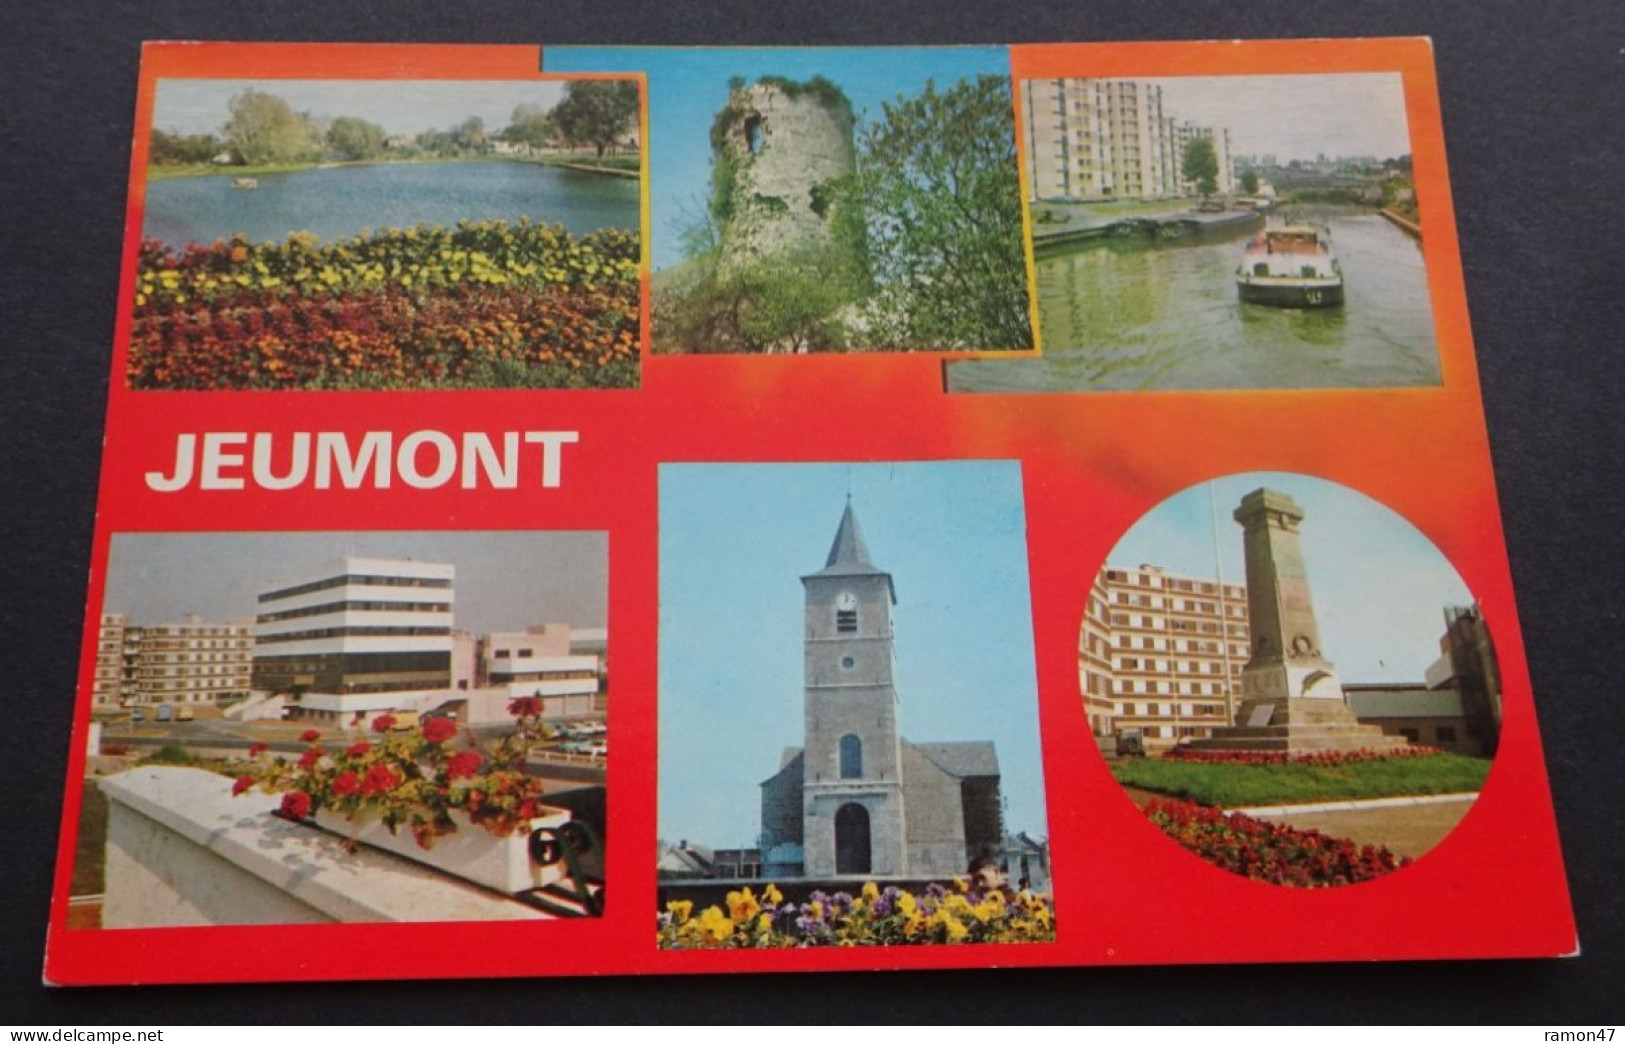 Jeumont - Edition "Europ"-Pierron, Sarreguemines - Avesnes Sur Helpe